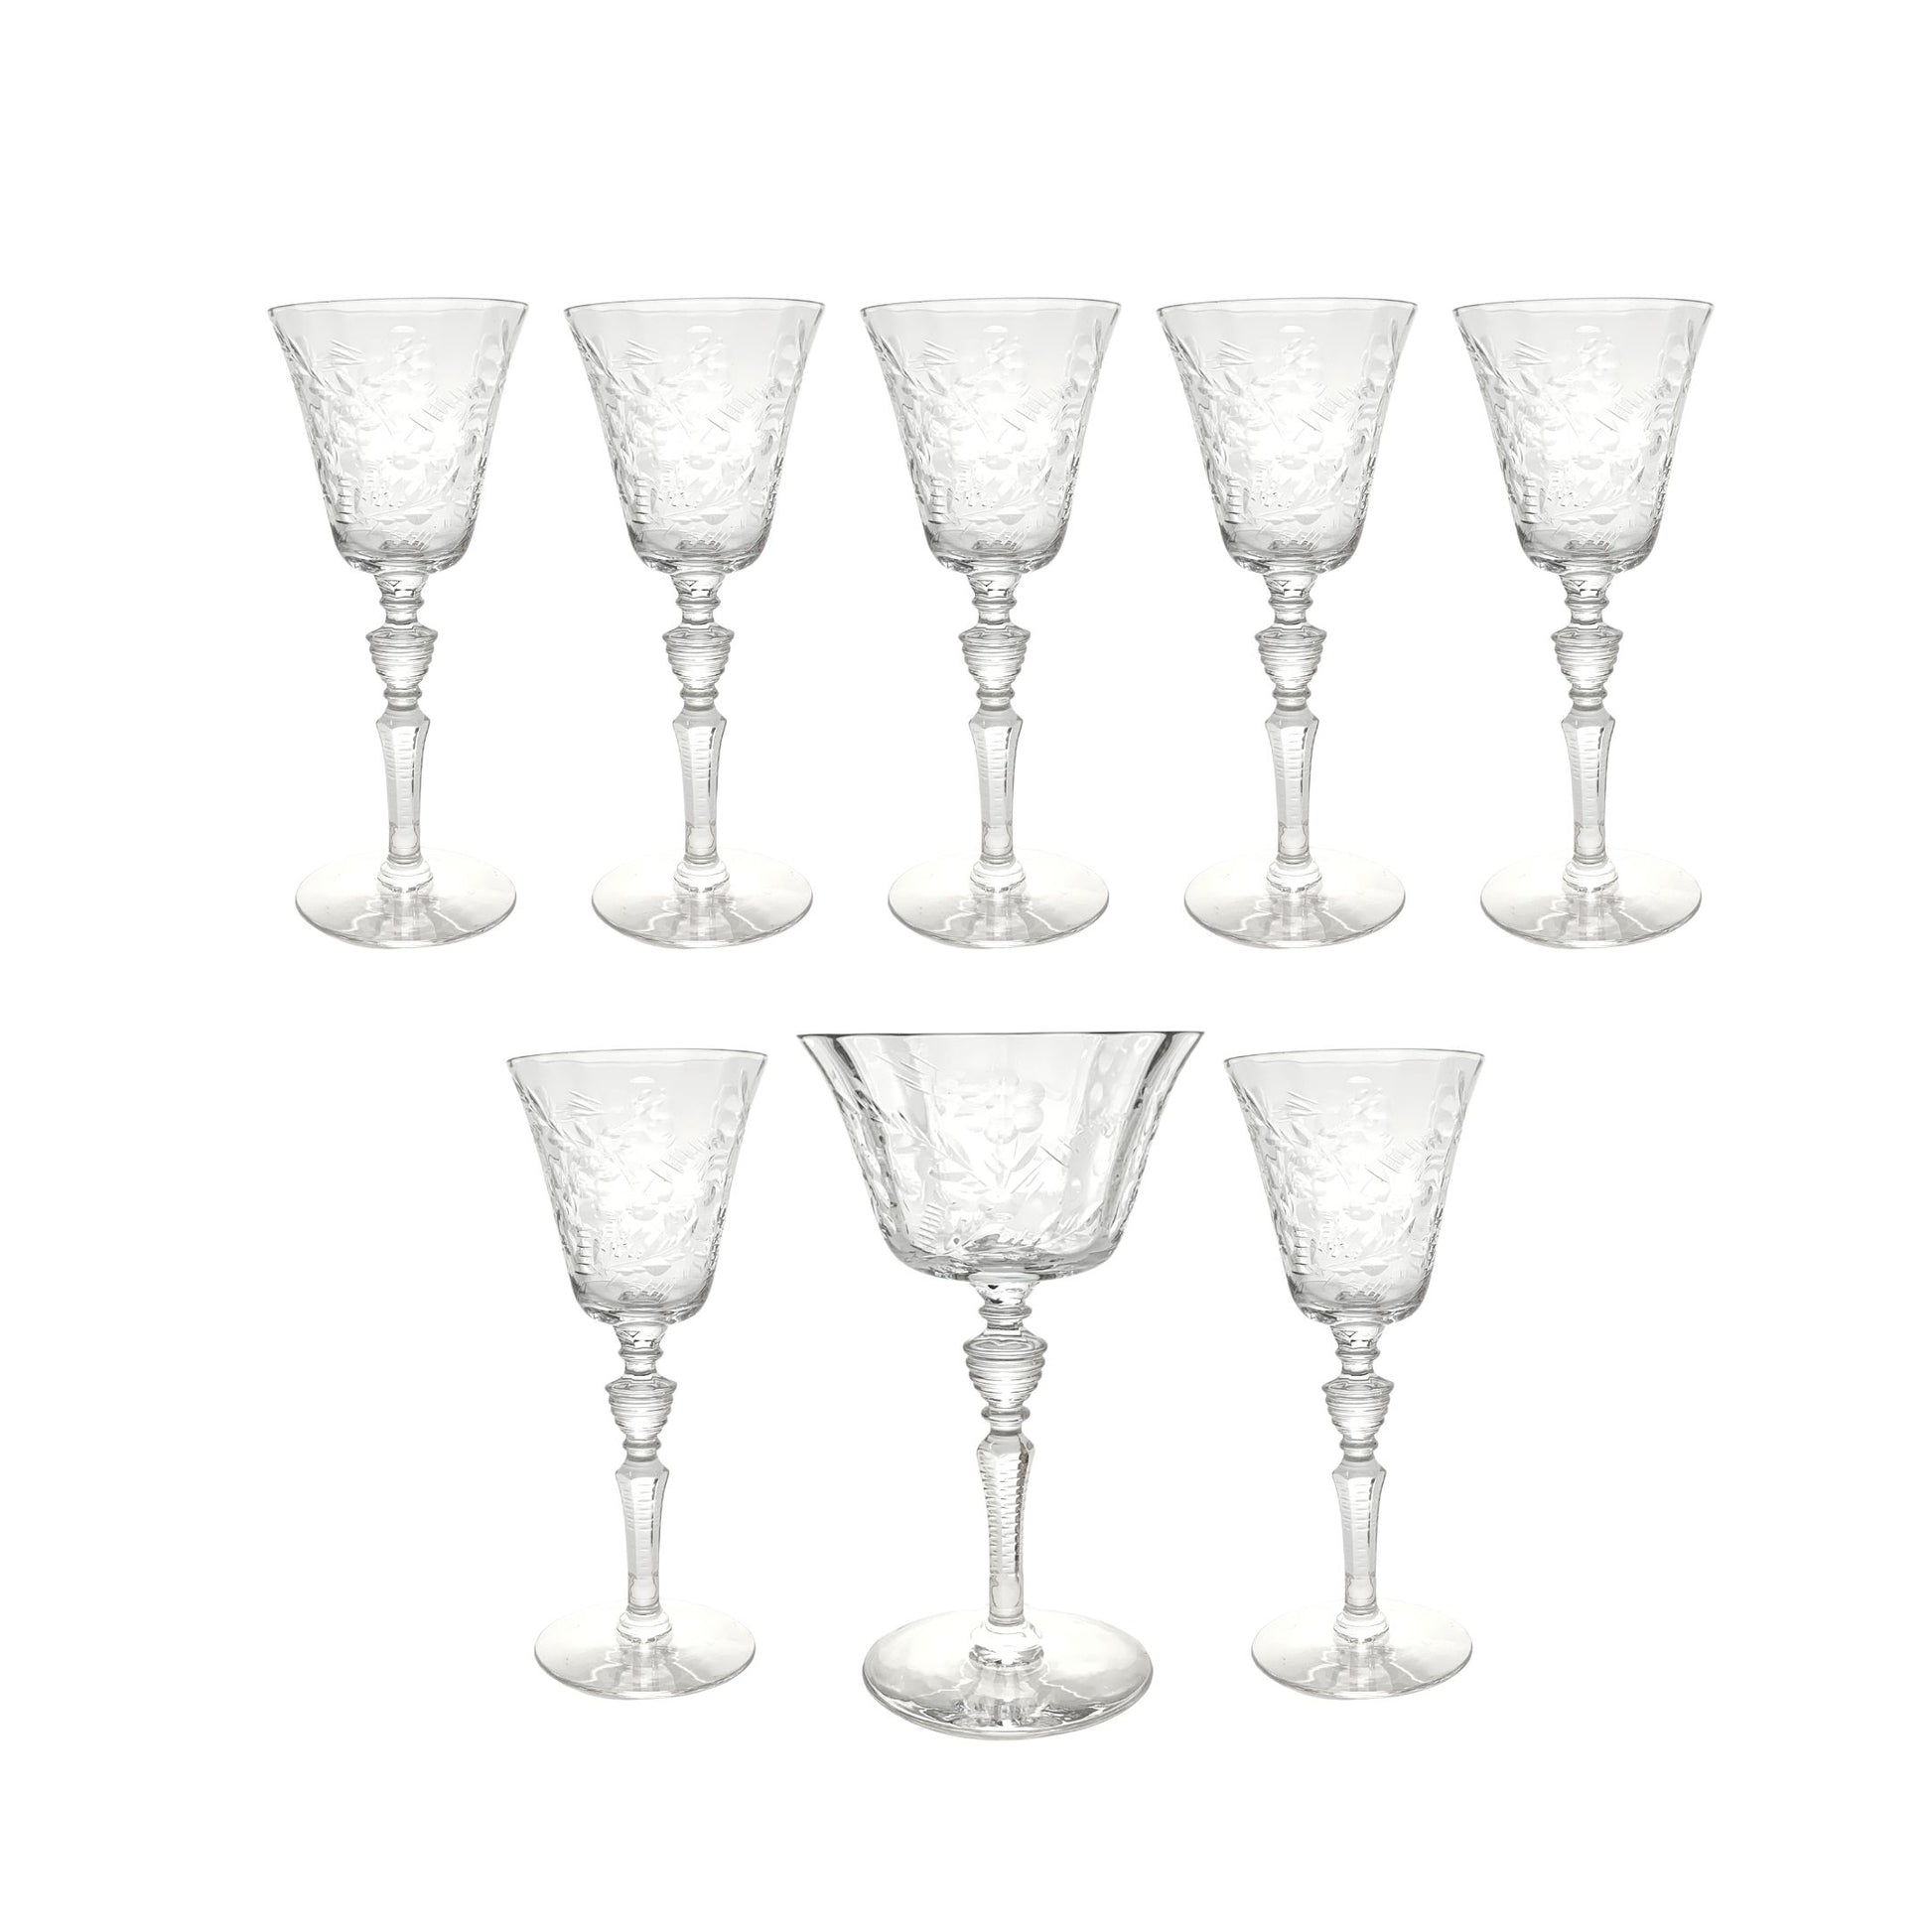 4 Vintage Etched Tall Wine Glasses ~ Water Goblets, Rock Sharpe